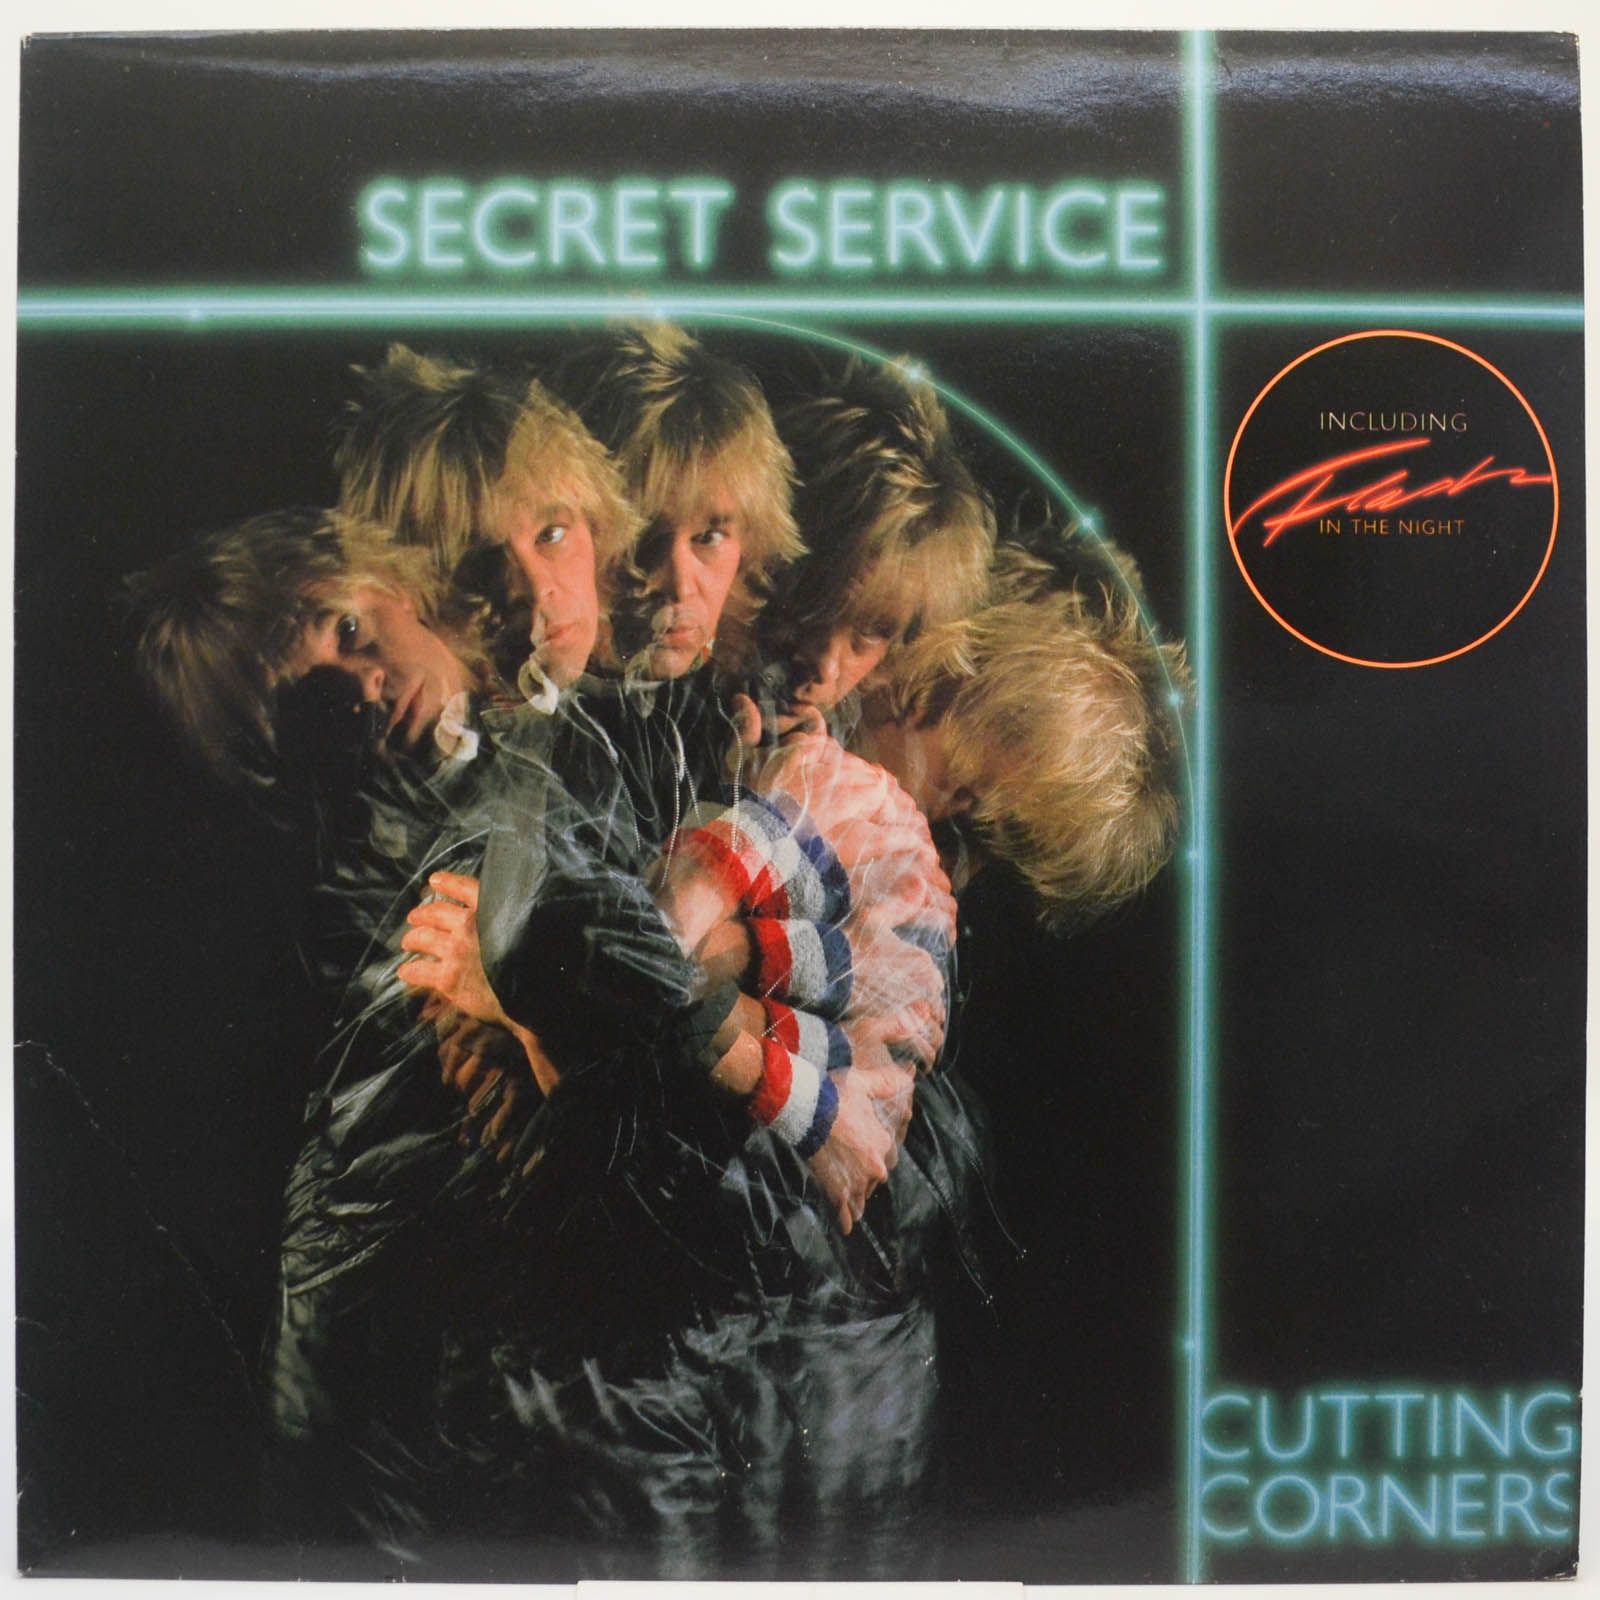 Secret Service — Cutting Corners (1-st, Sweden), 1982